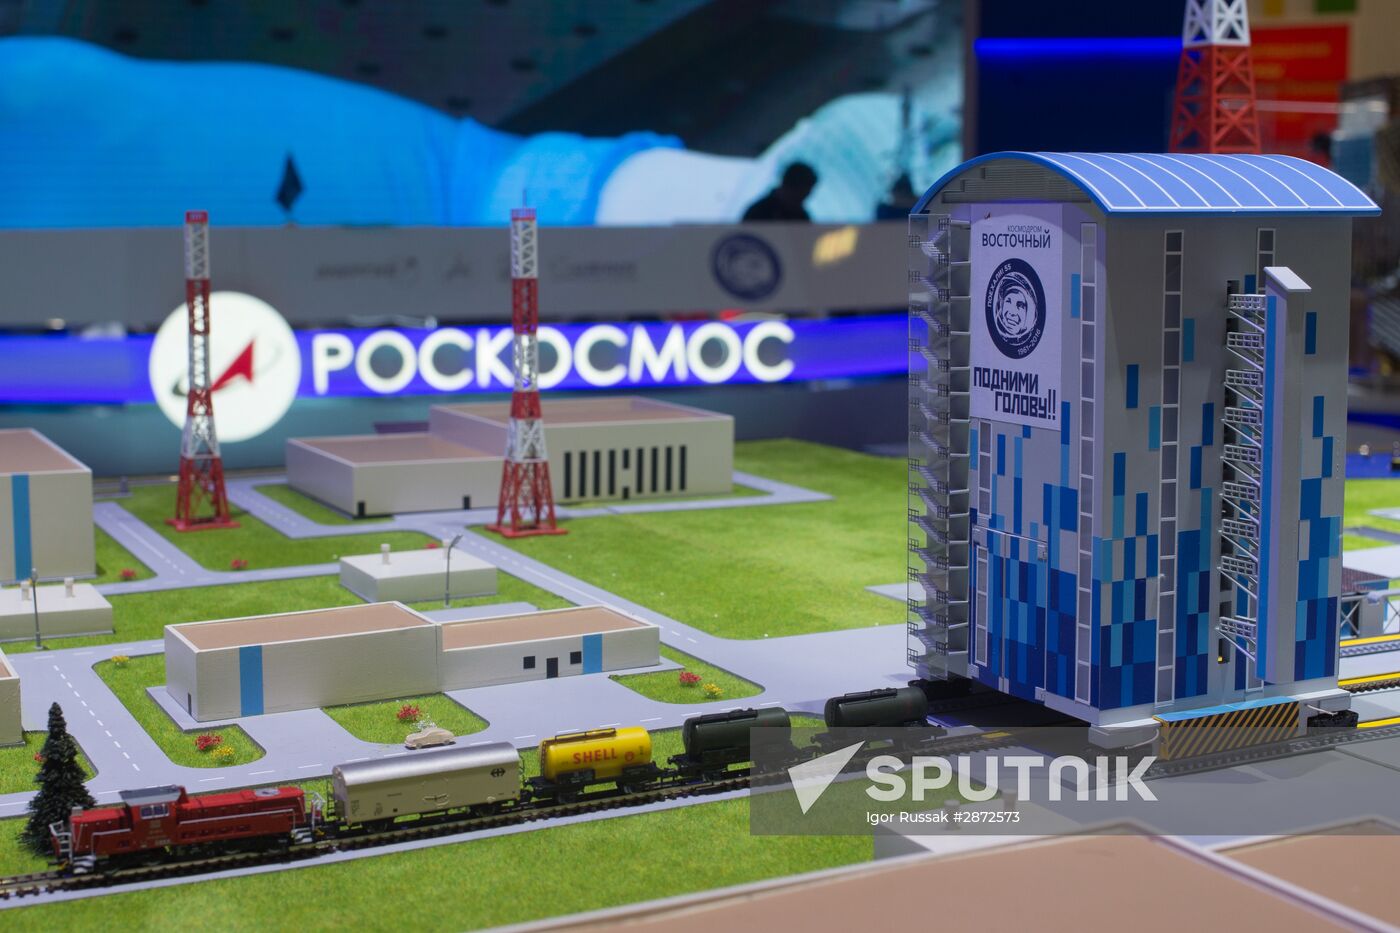 Preparations for St. Petersburg International Economic Forum's opening